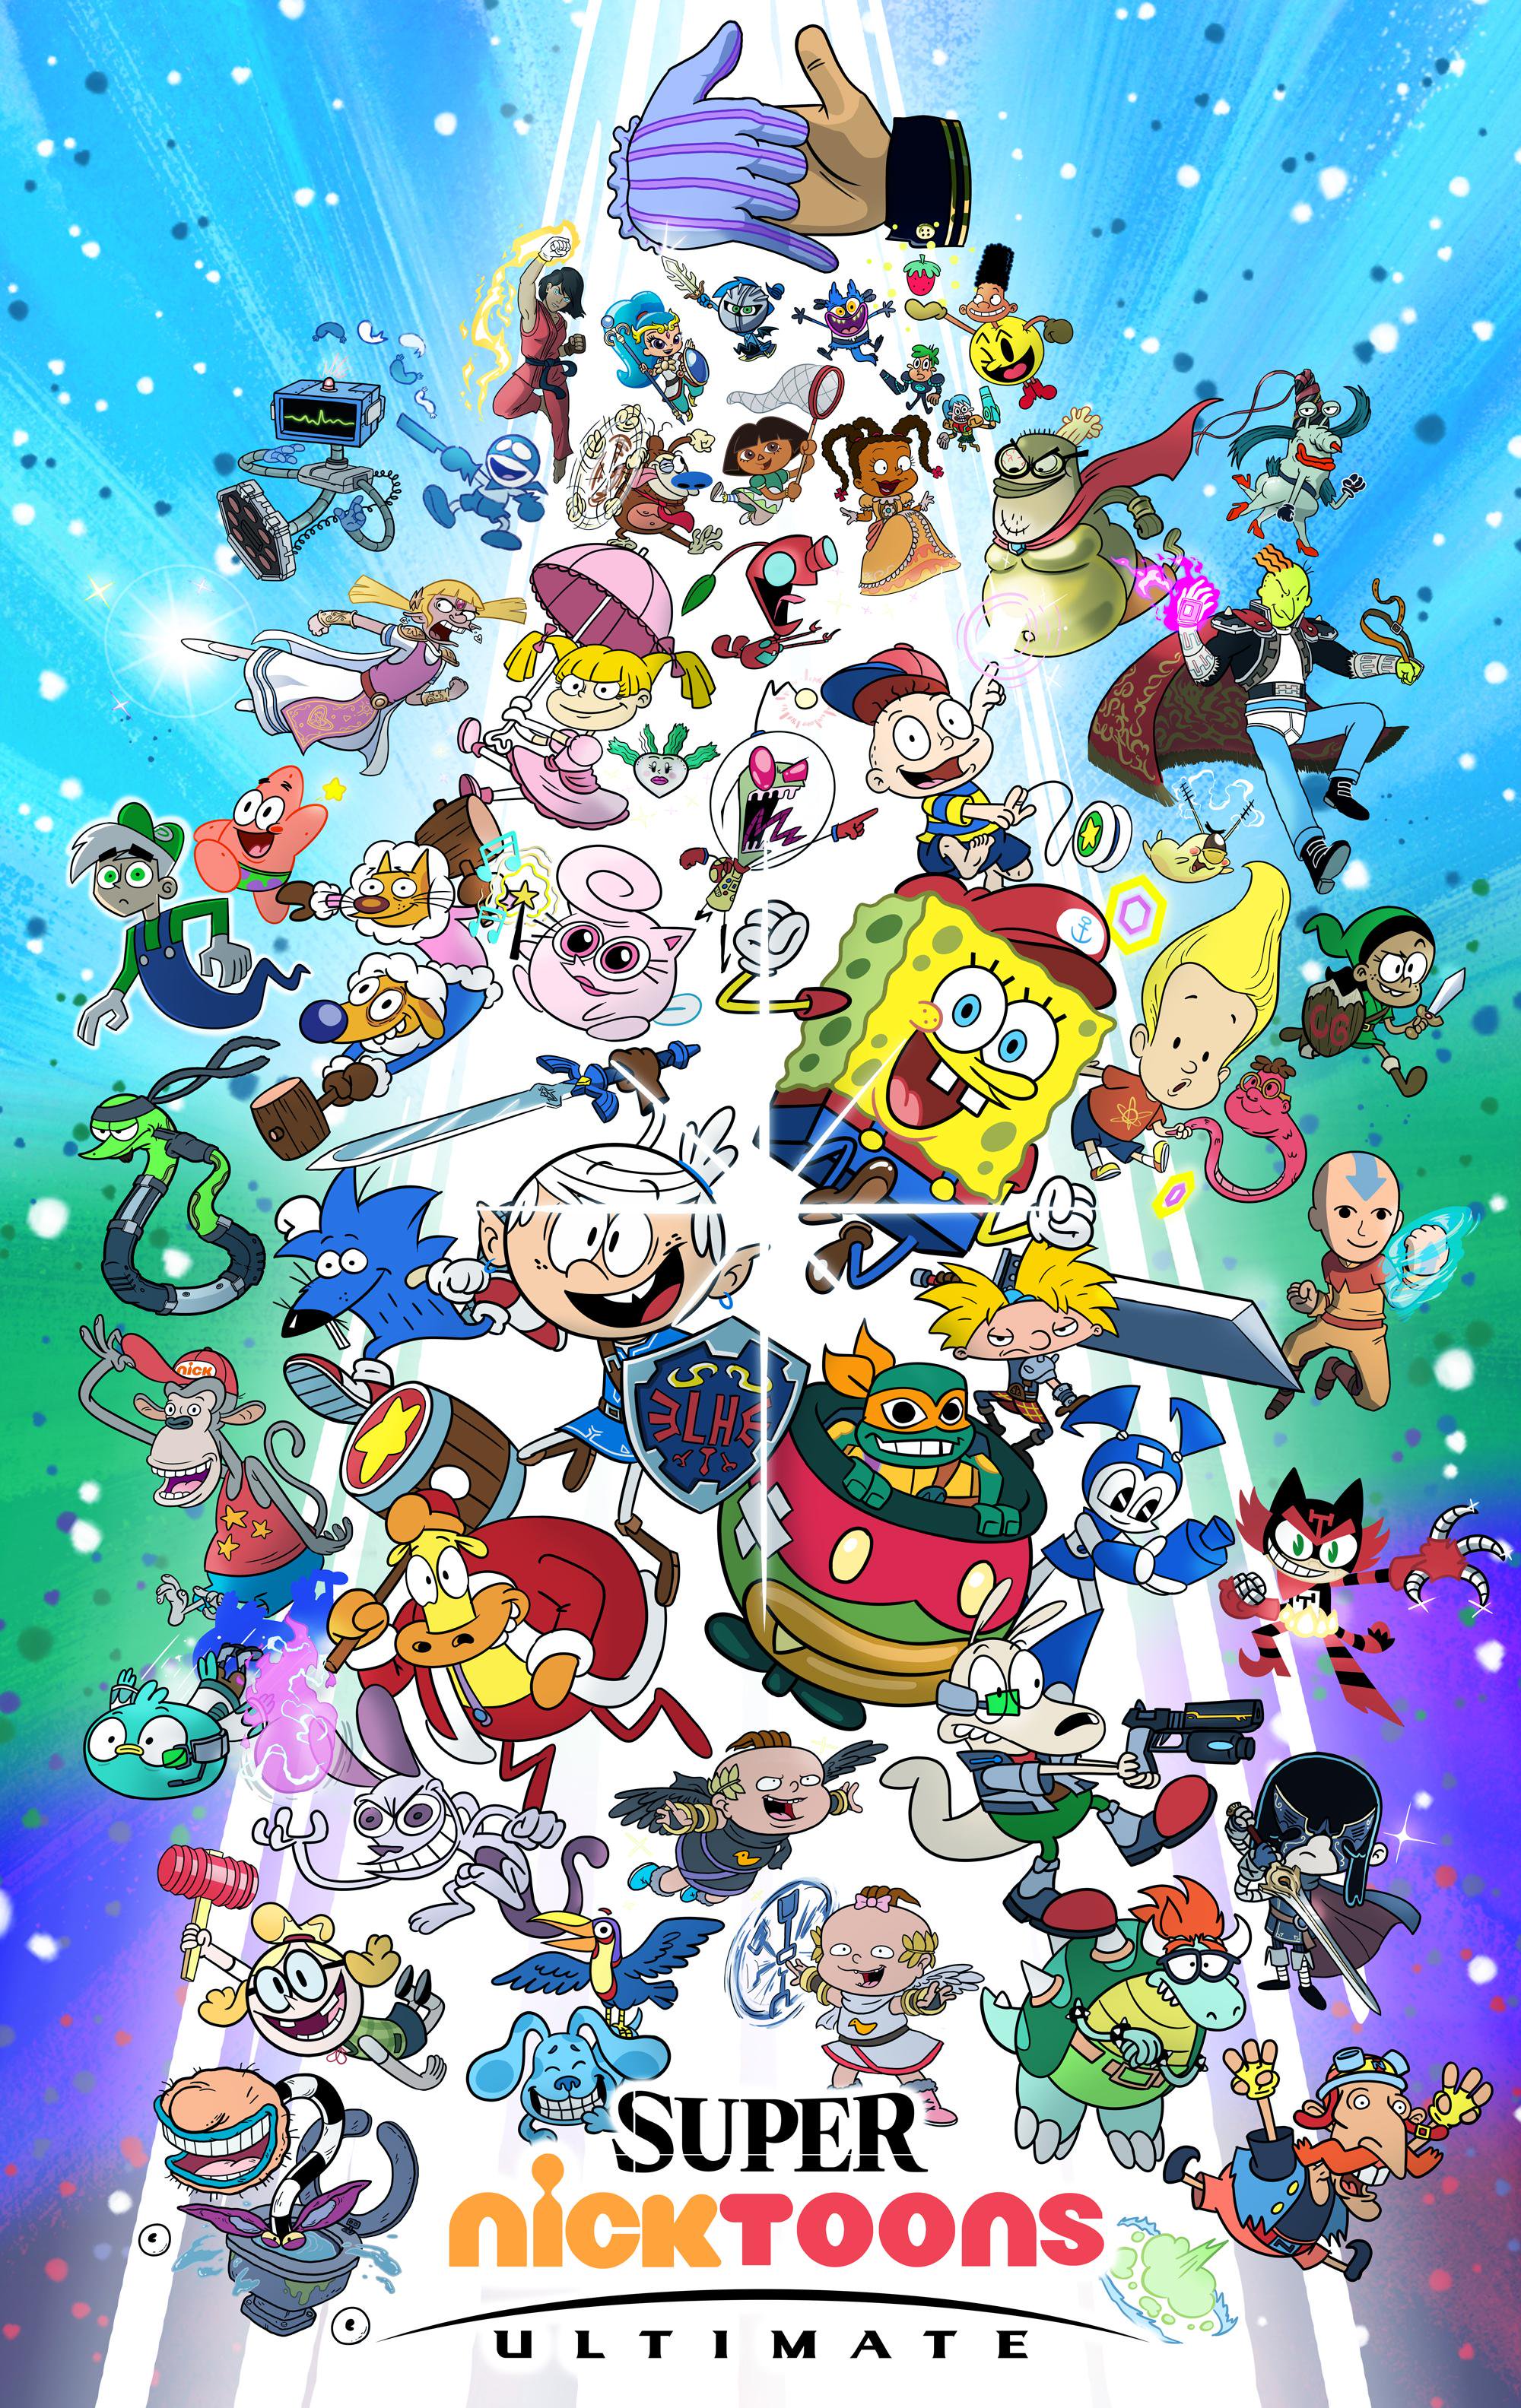 Nickelodeon artists create Smash Bros. Ultimate-style artwork featuring Nicktoons